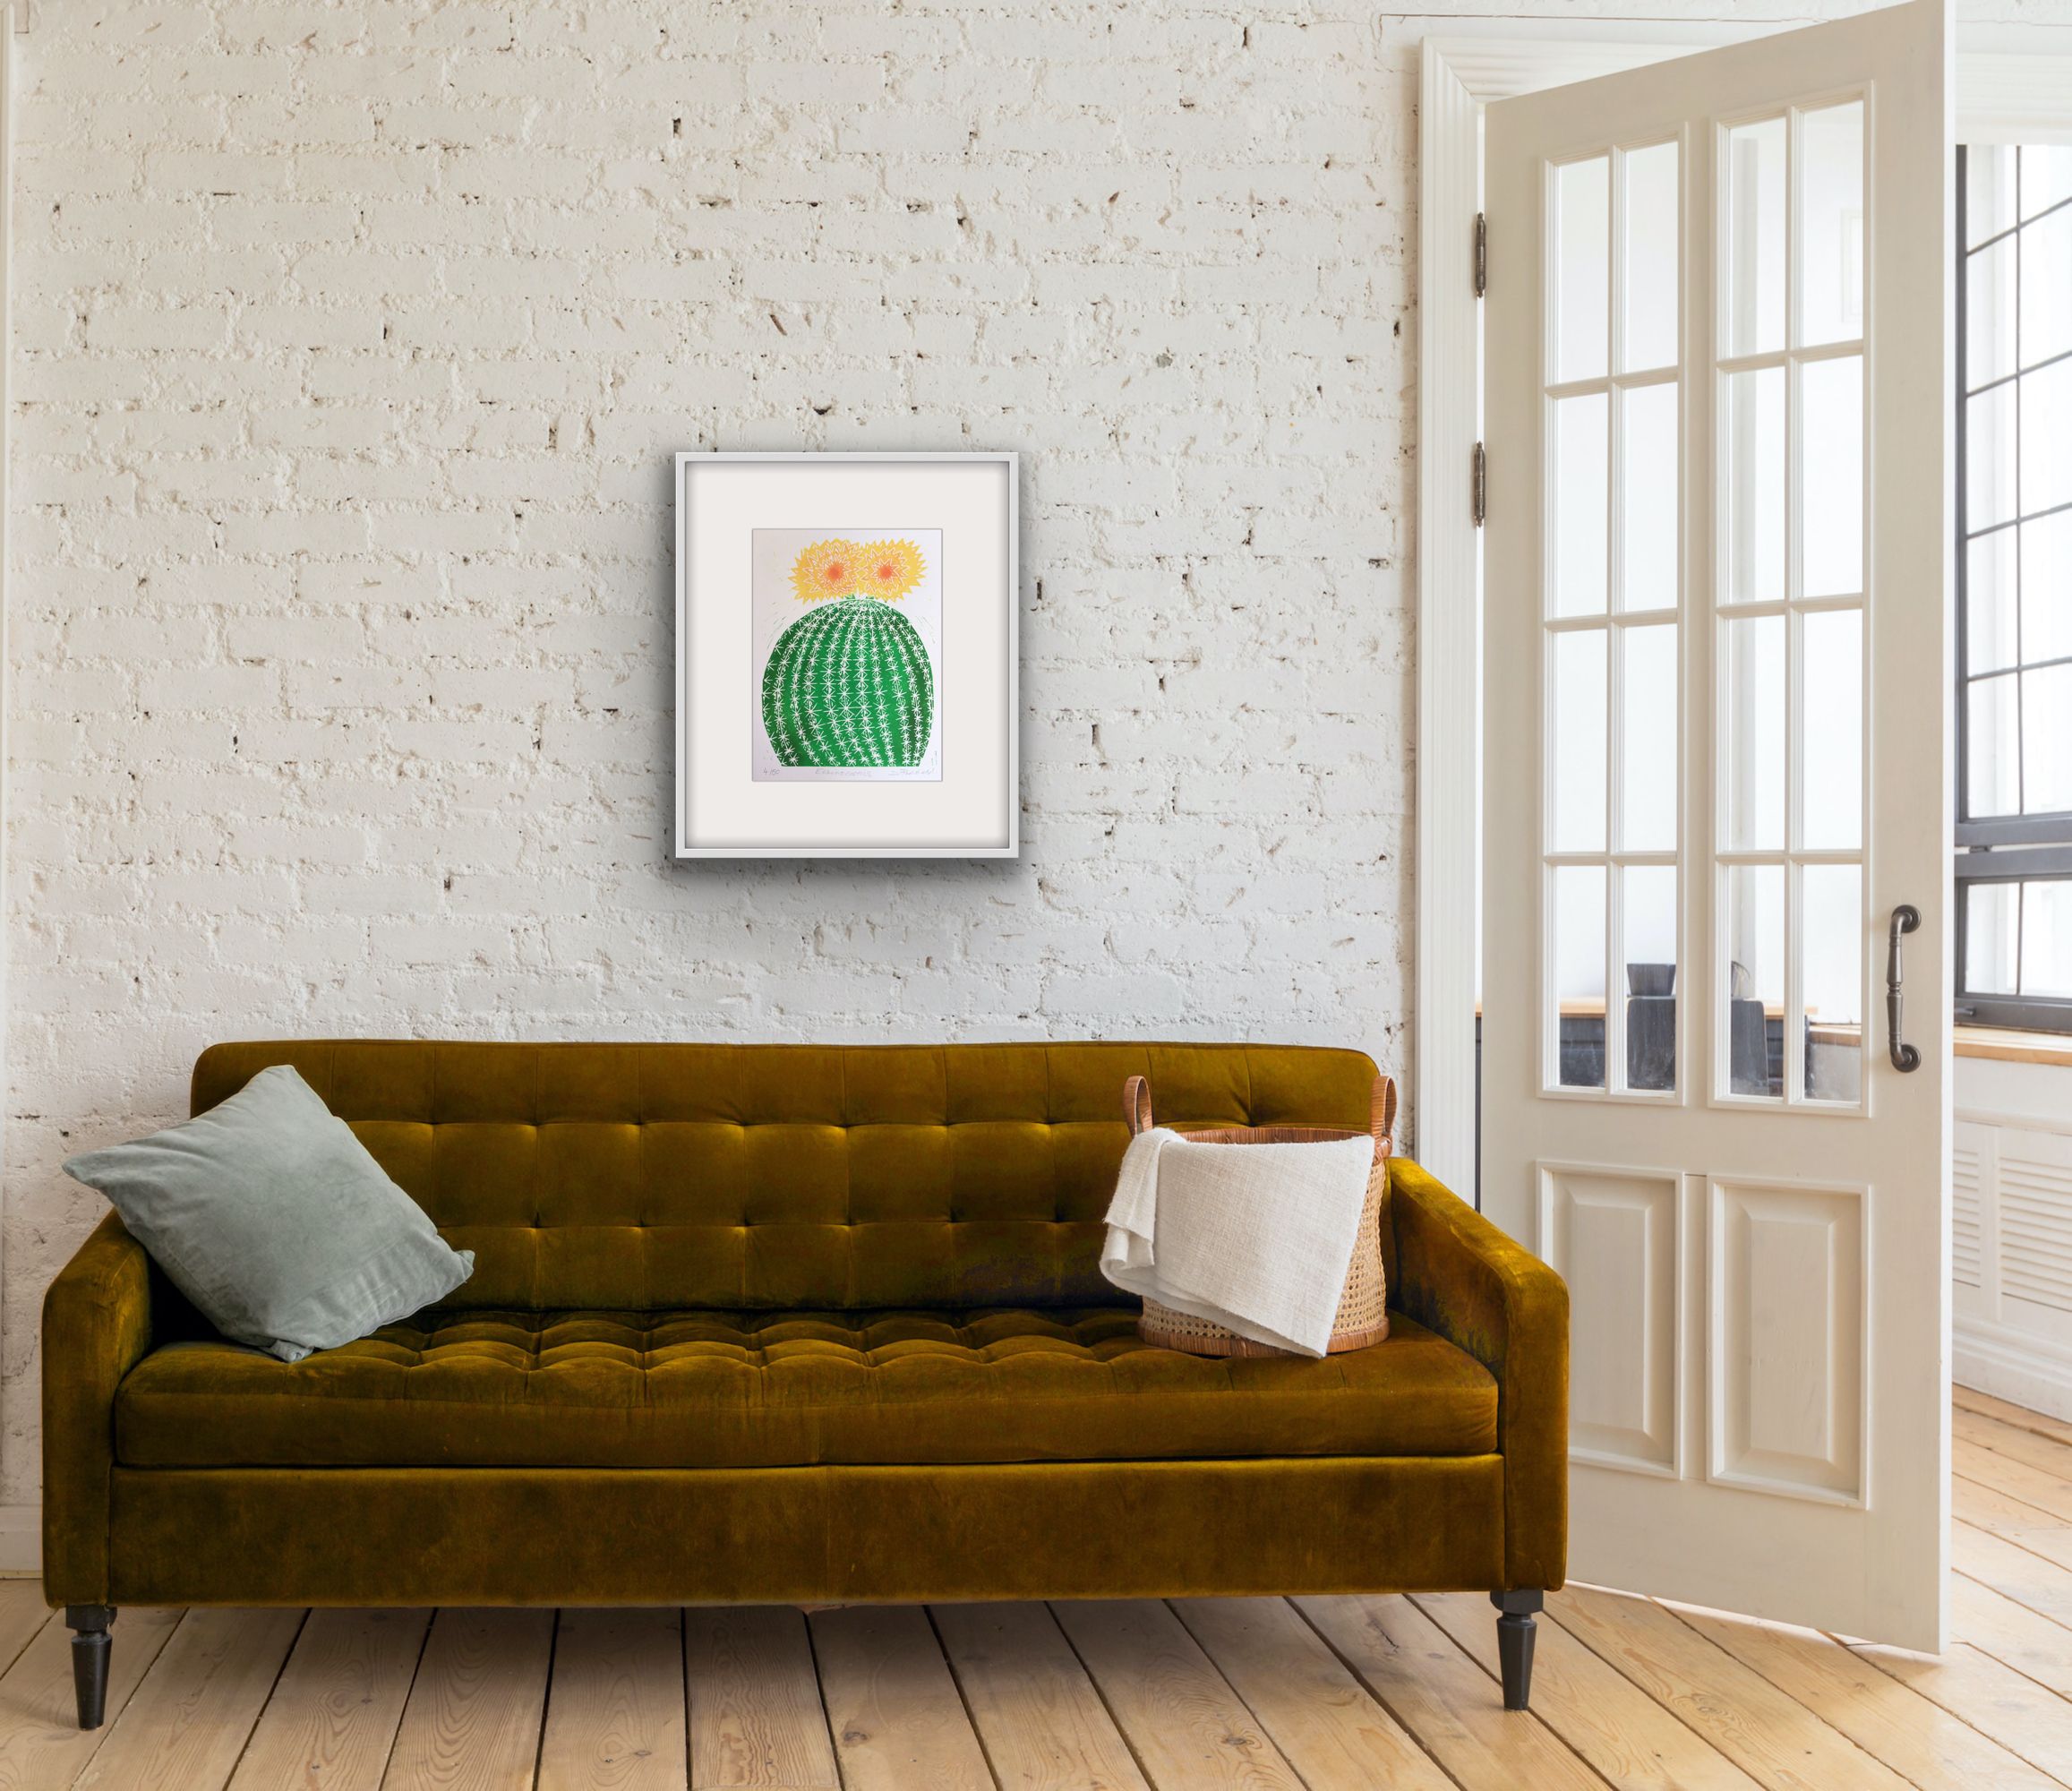 Echino Cactus by Joanna Padfield - Secondary Image